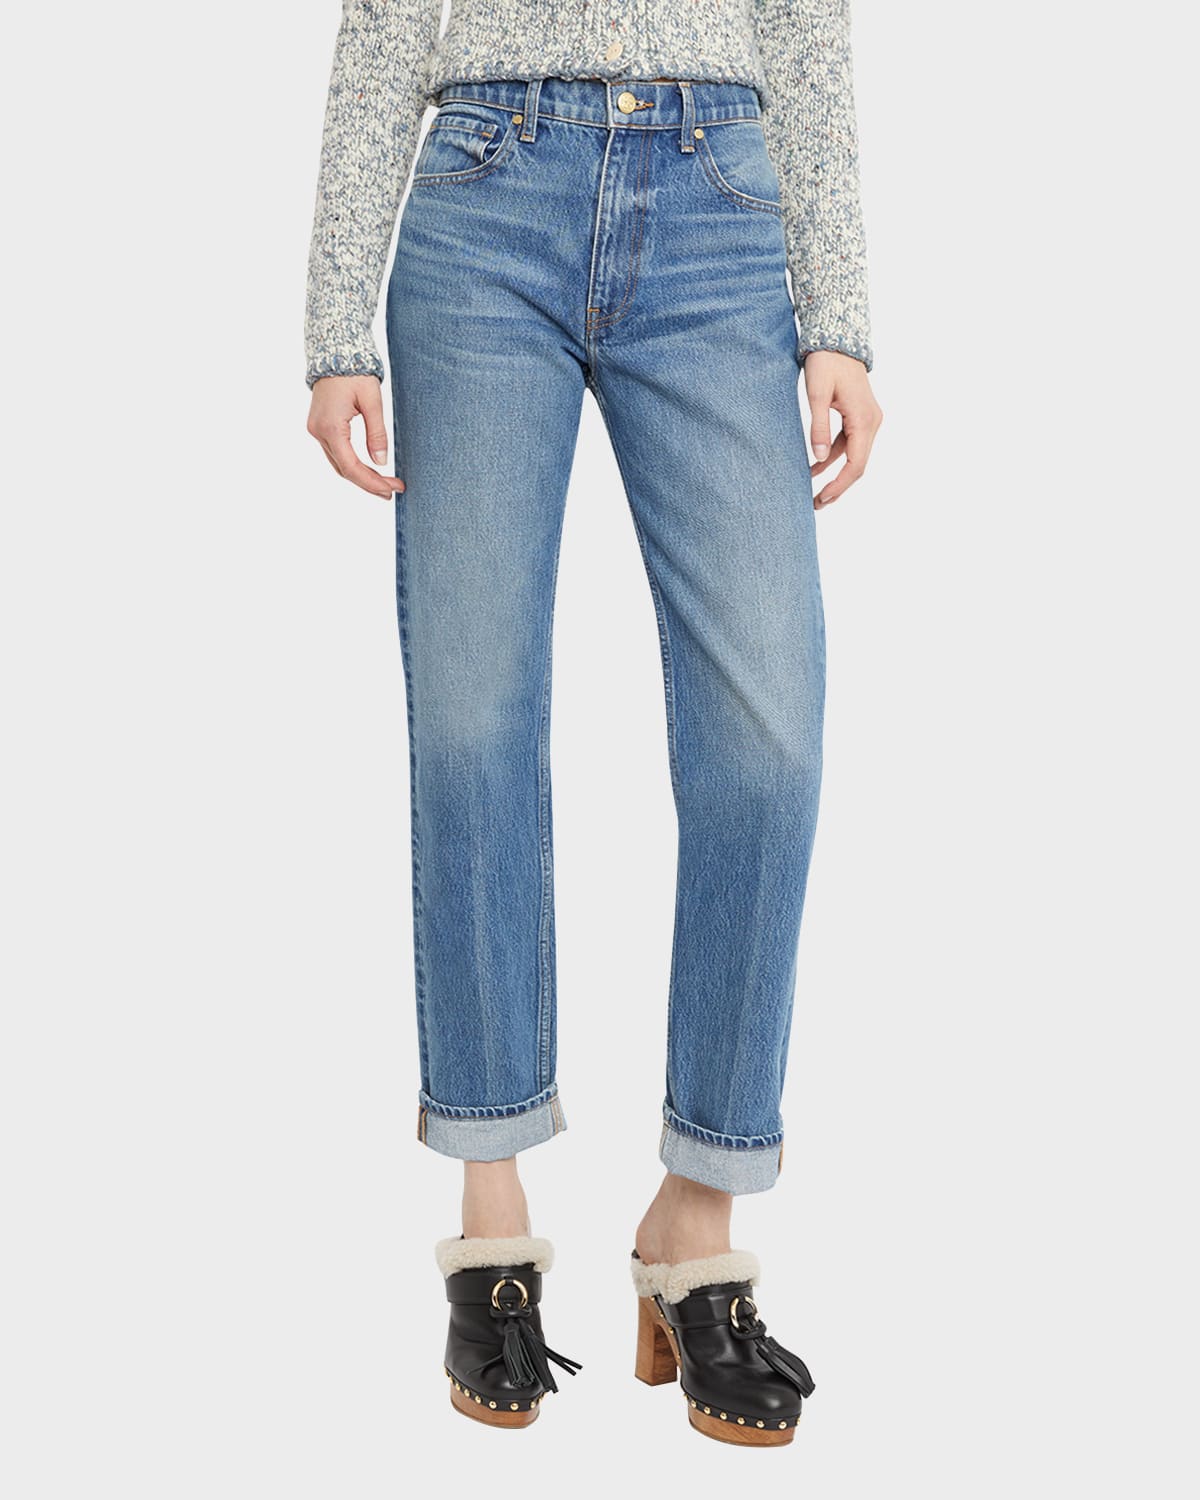 The Daphne Straight-Leg Cuffed Denim Jeans